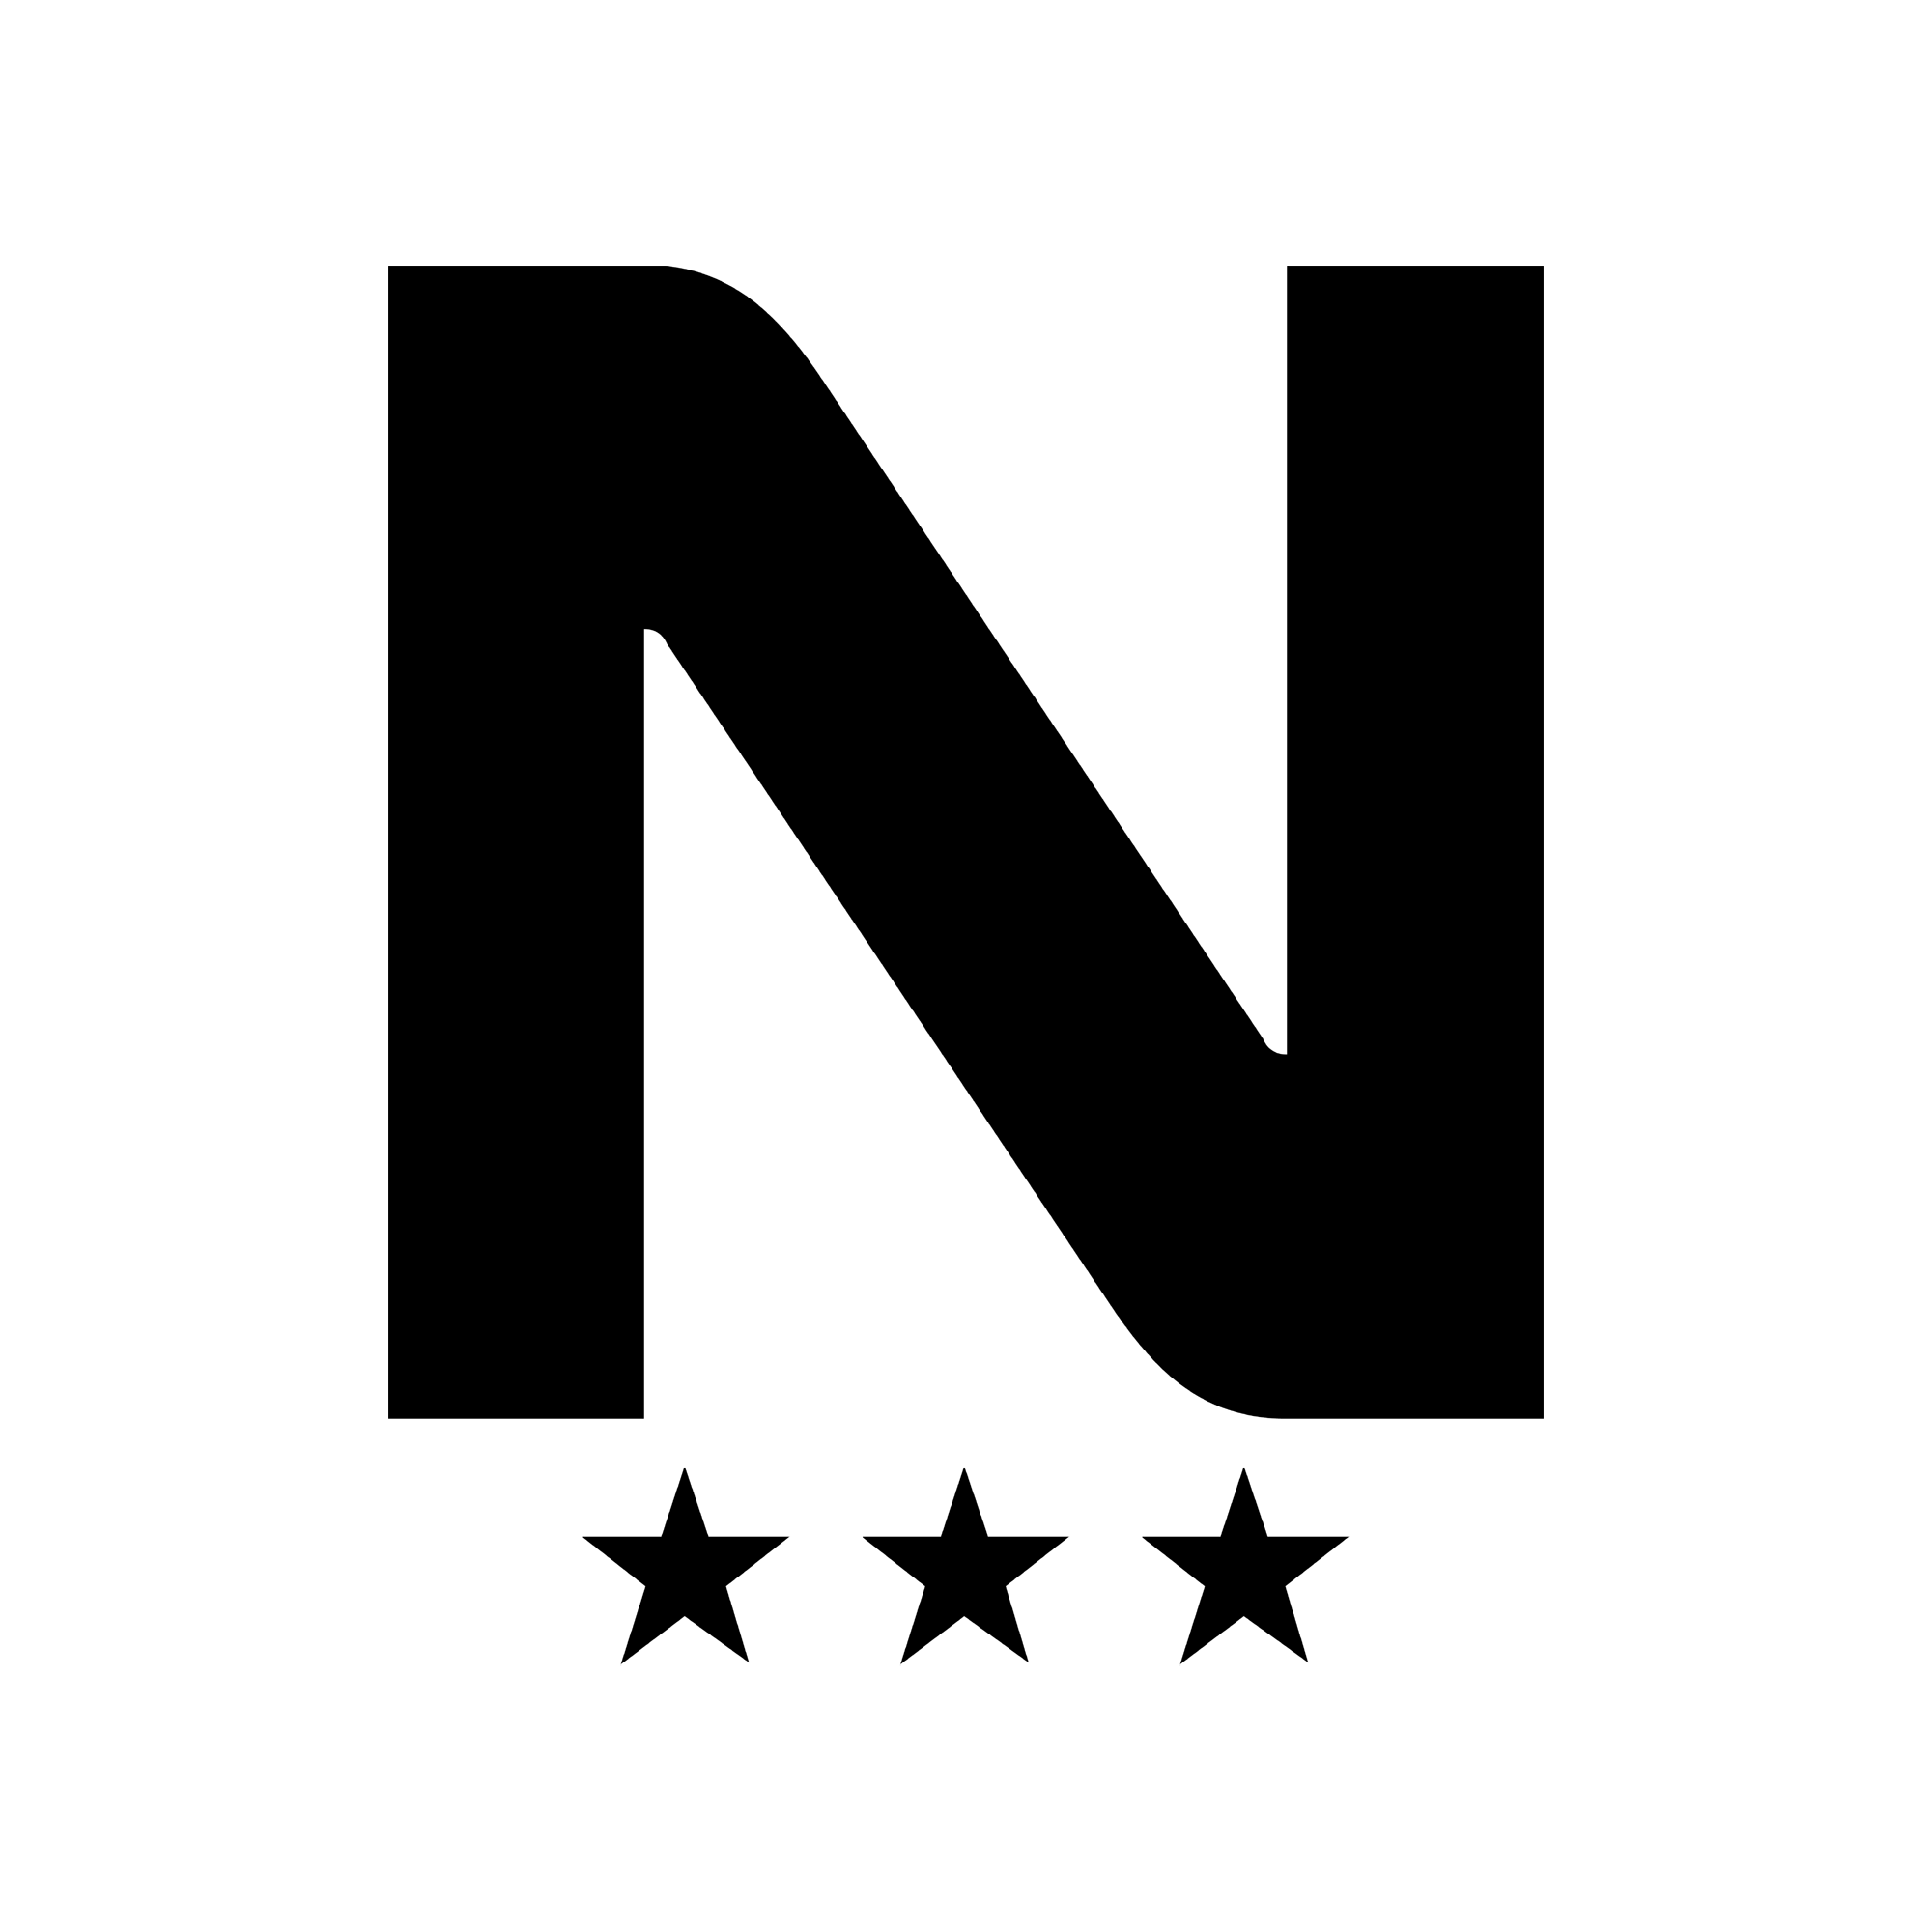 NPP Logo - File:NPP NATIONAL PROGRESS PARTY LOGO DESIGN.png - Wikimedia Commons